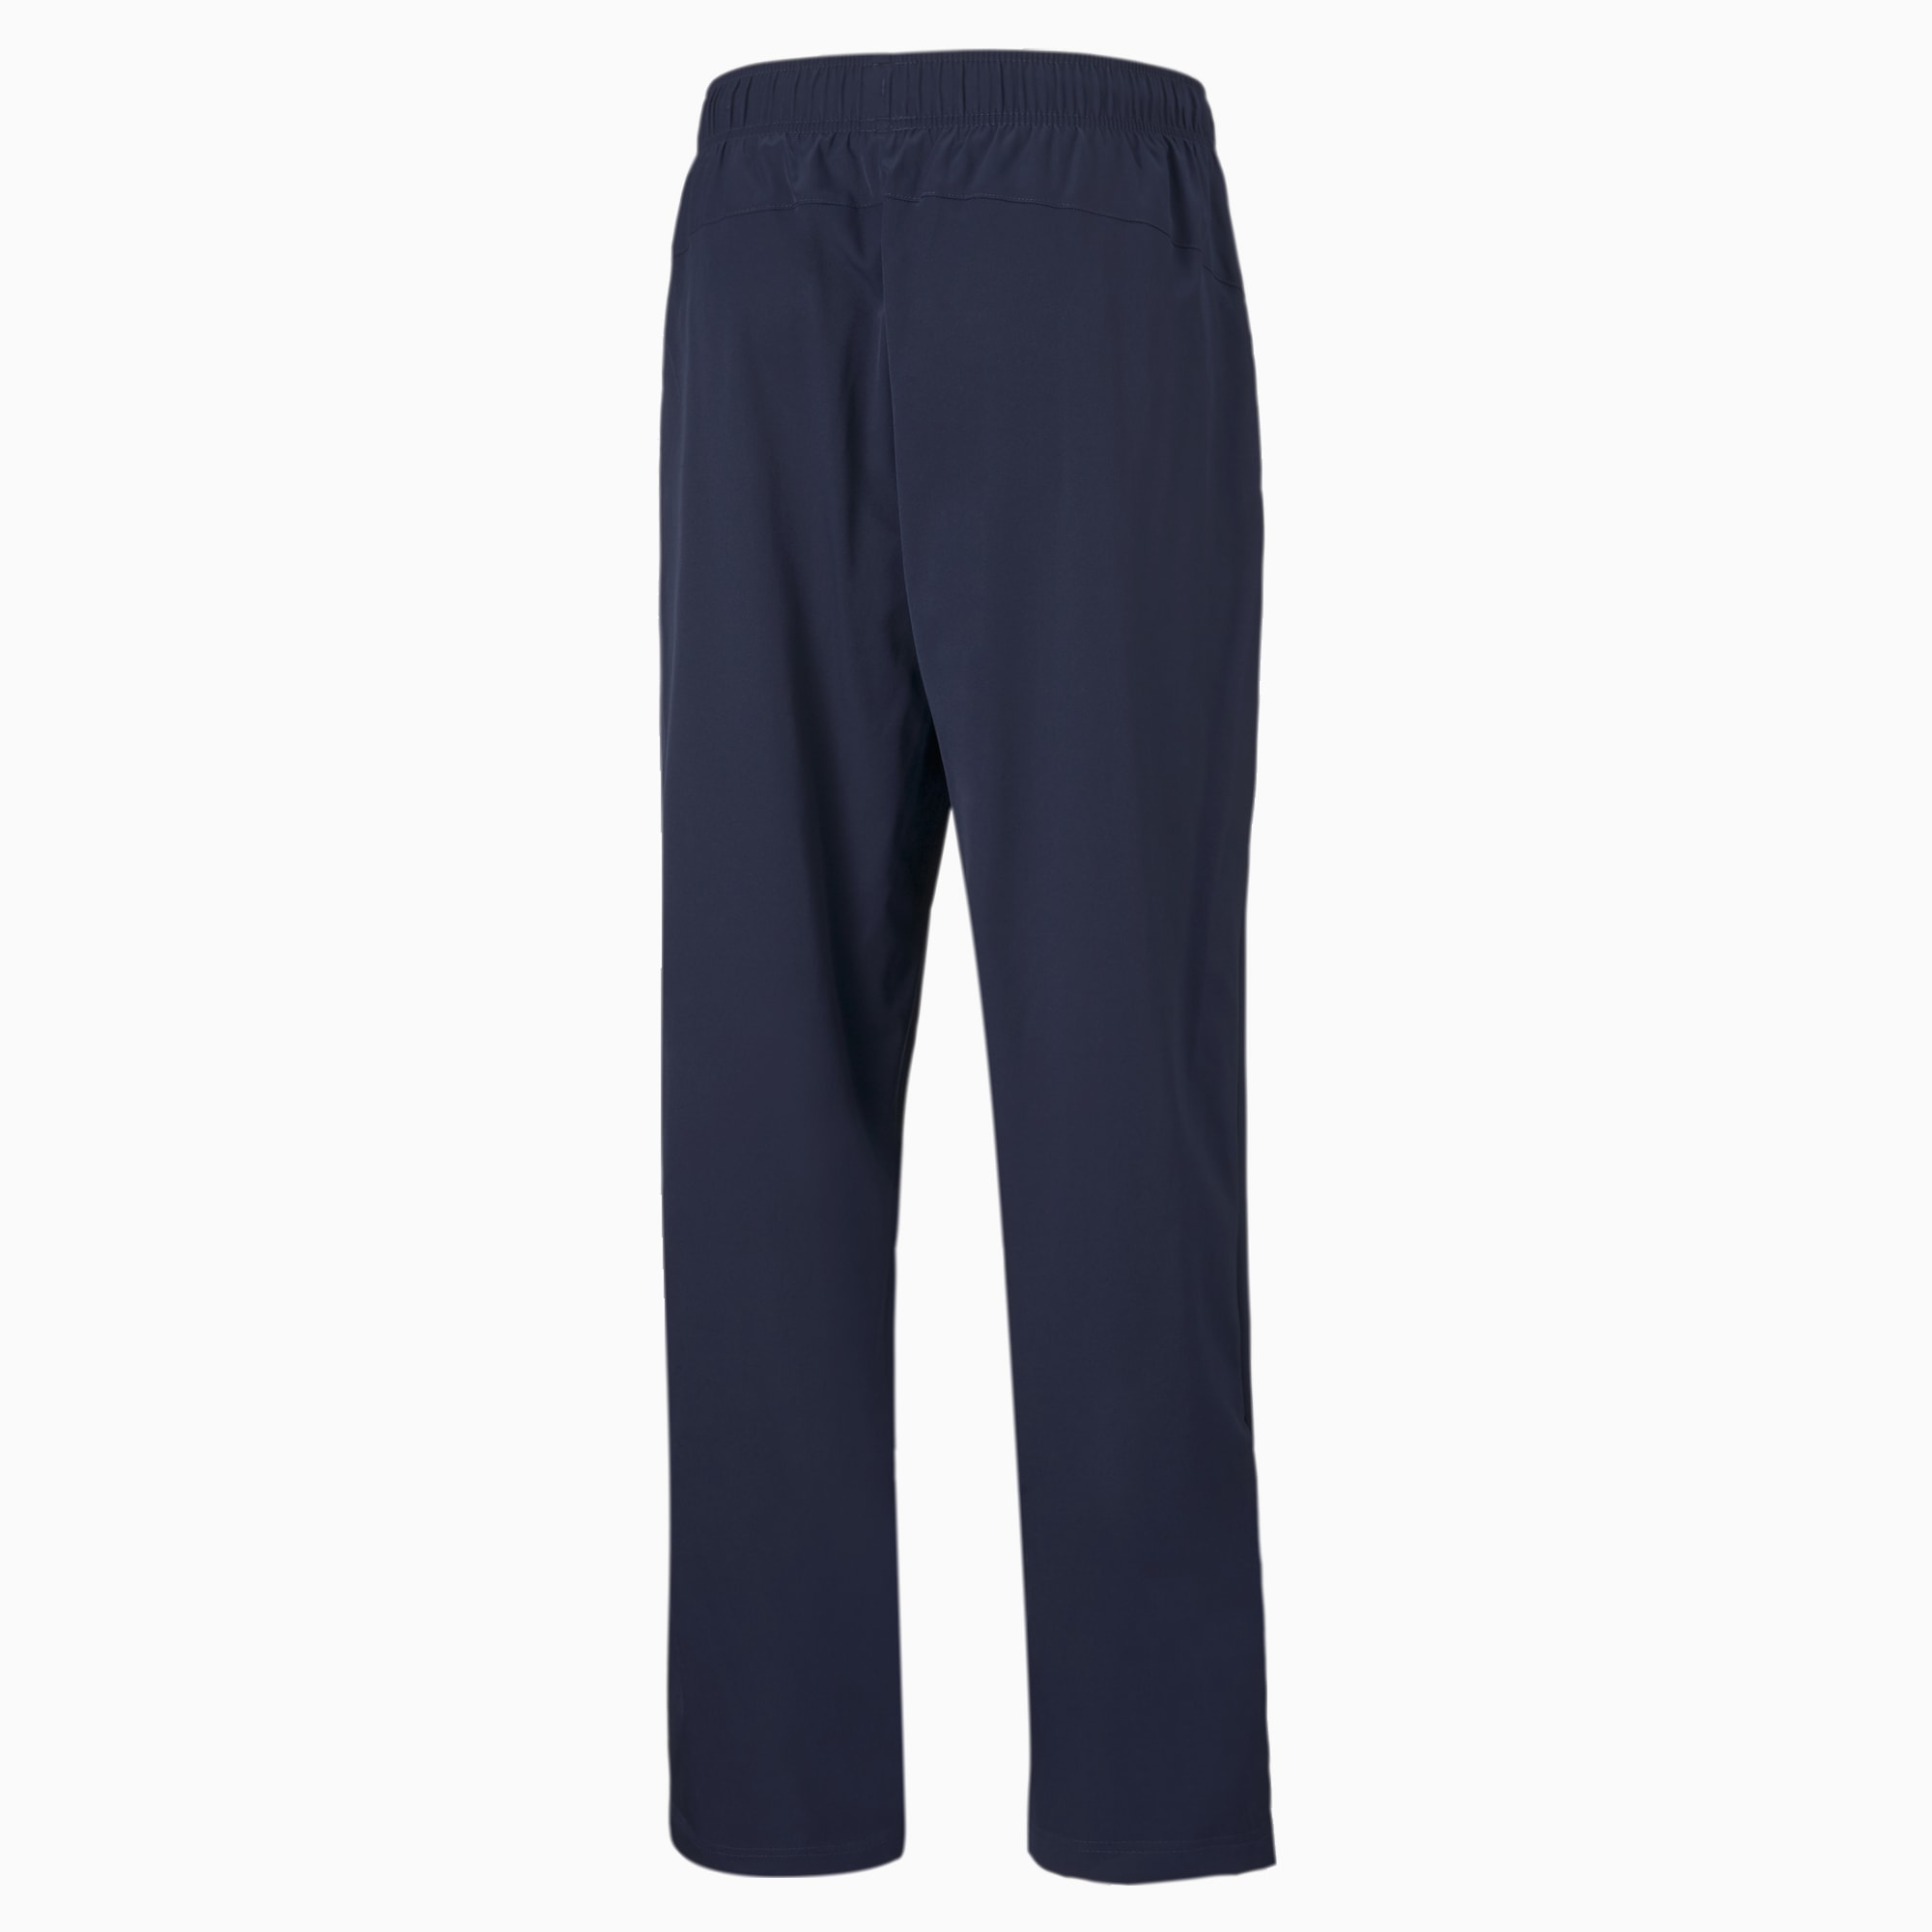 PUMA Active Woven Men's Sweatpants, Peacoat, Size XXS/L, Clothing